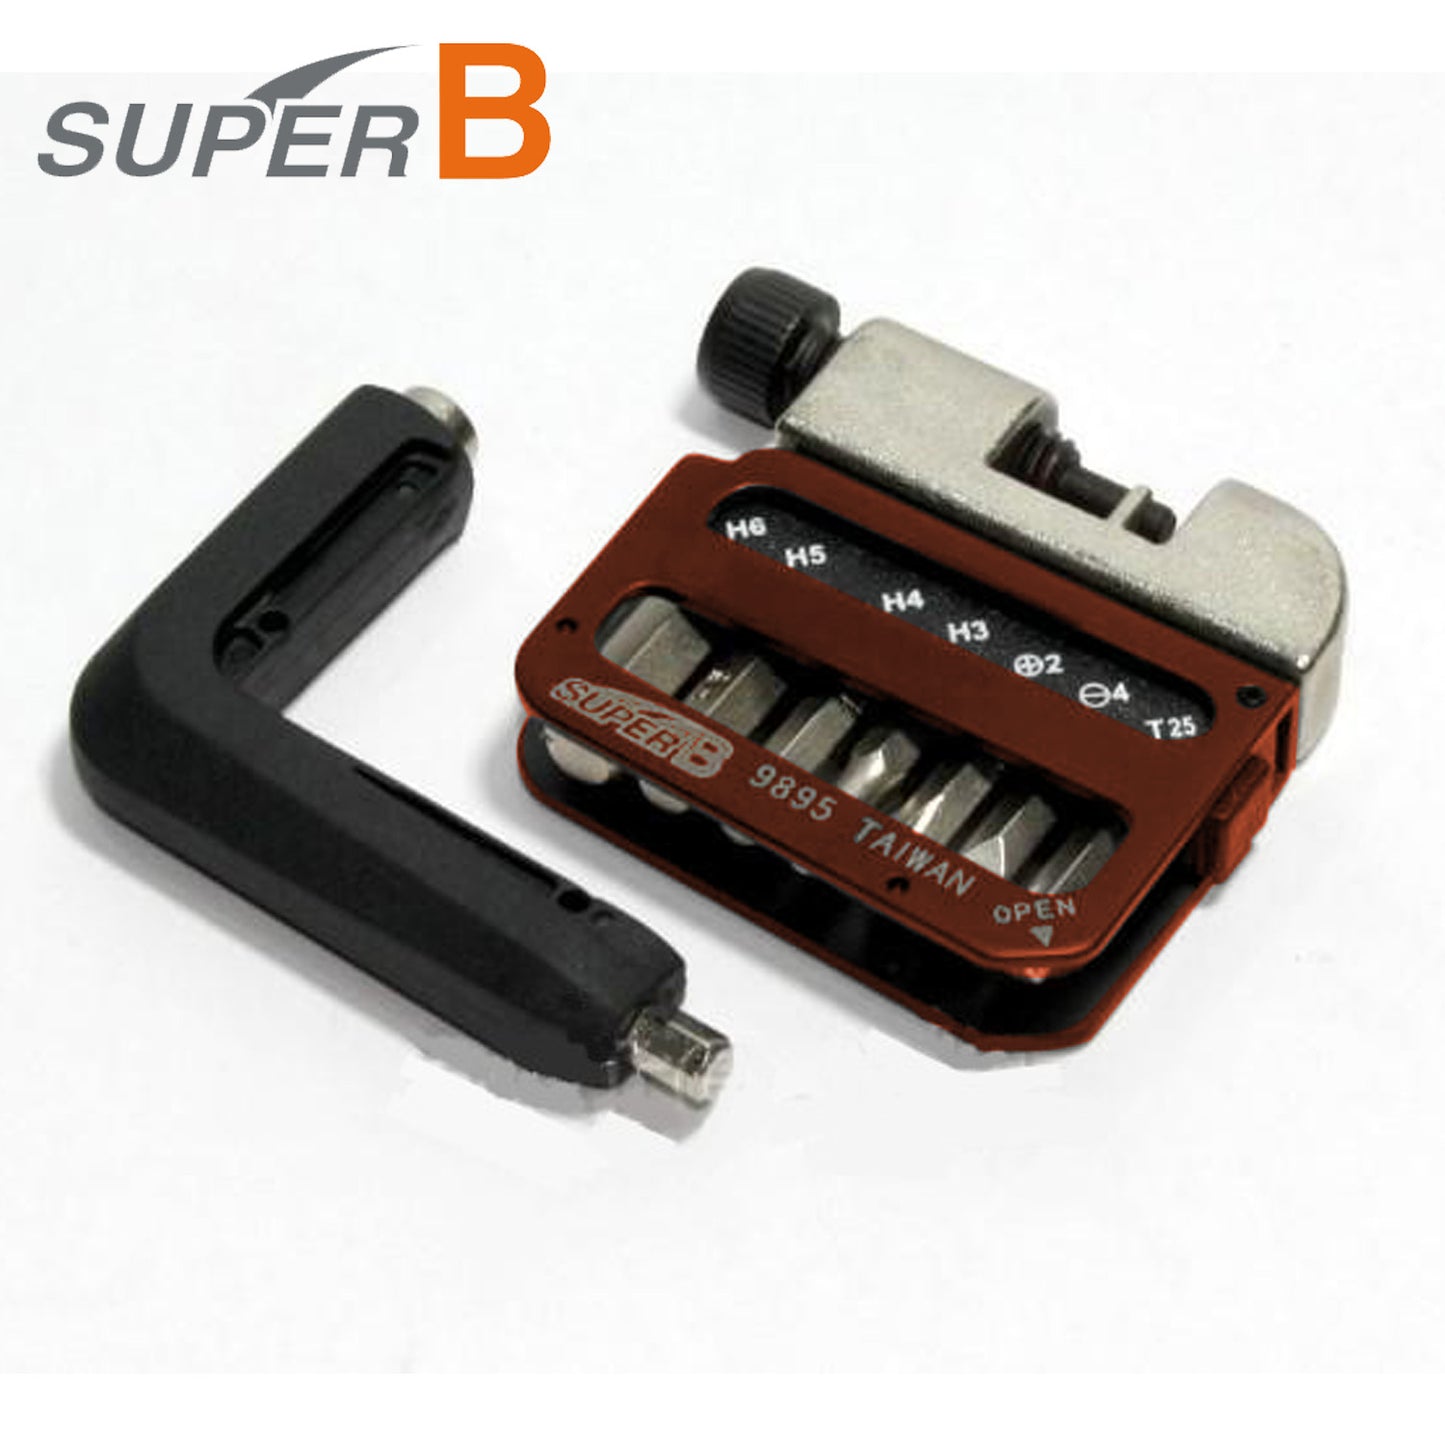 Super B SB9895 Pocket Multi Tool 8 in 1 with Chain Breaker (3, 4, 5, 6mm hex / Torx 25 / Screw) - Red